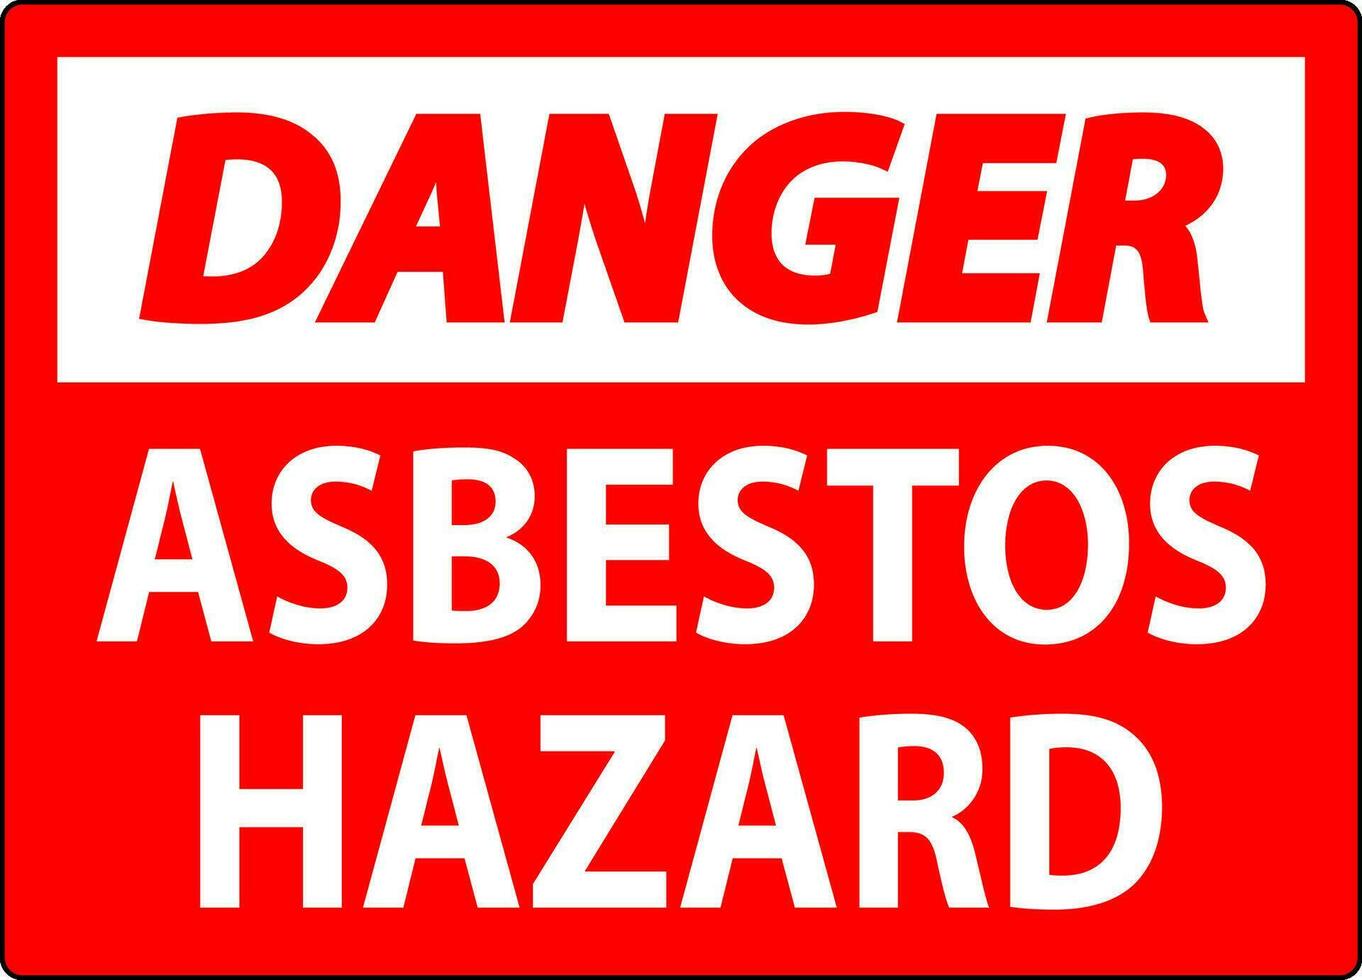 Asbestos Danger Signs Asbestos Hazard Area Authorized Personnel Only vector